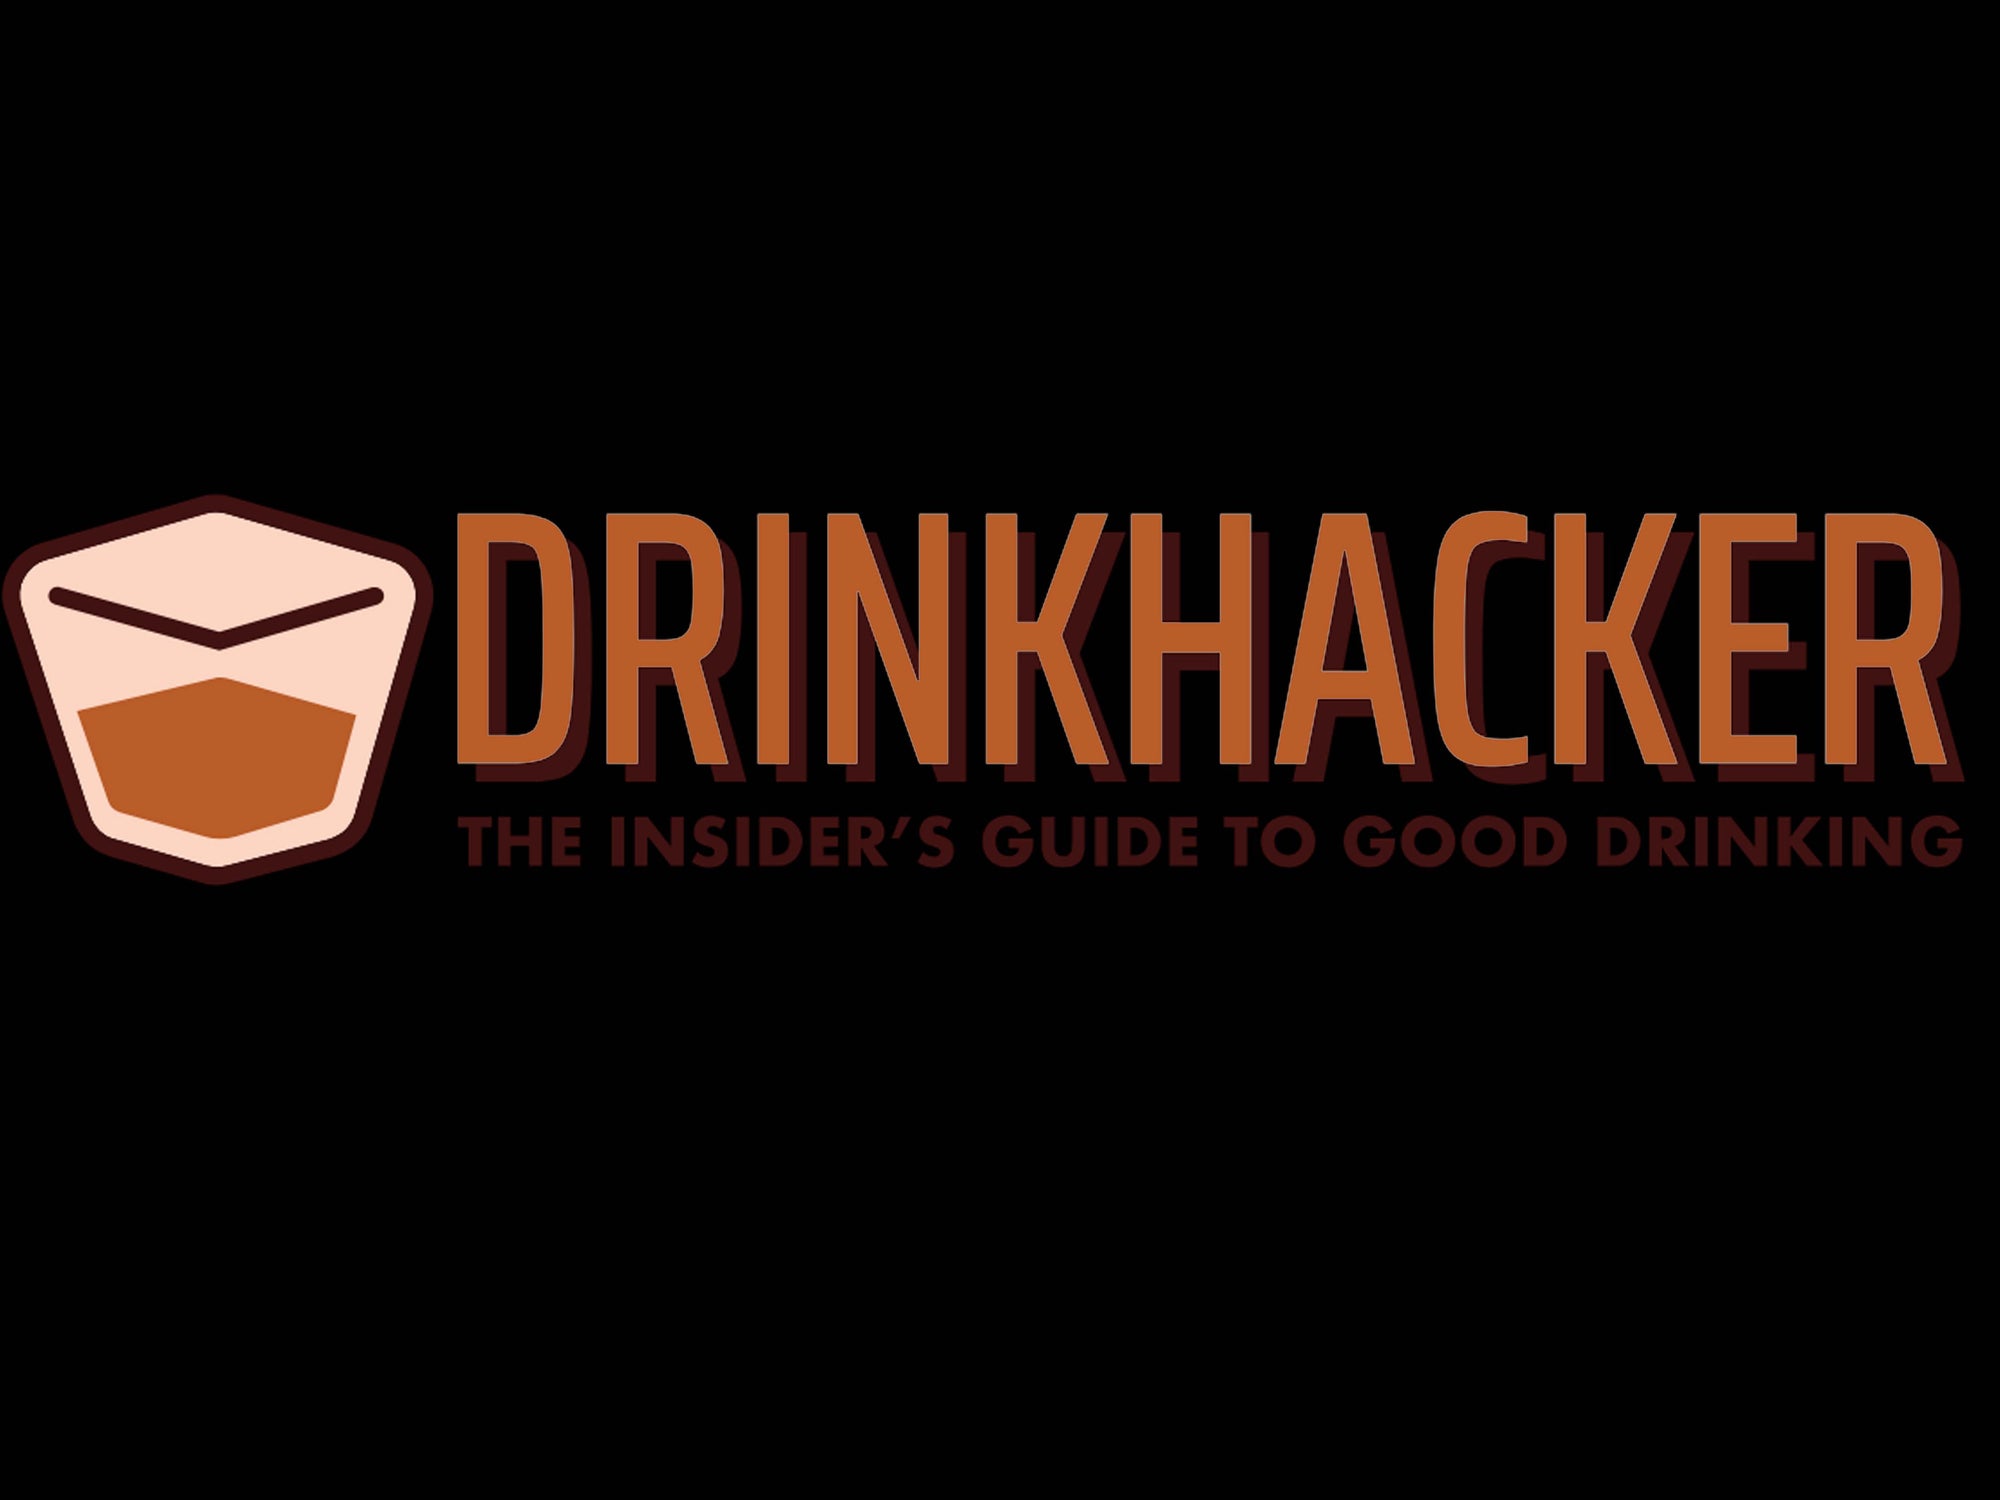 9.5/10 DrinkHacker Review